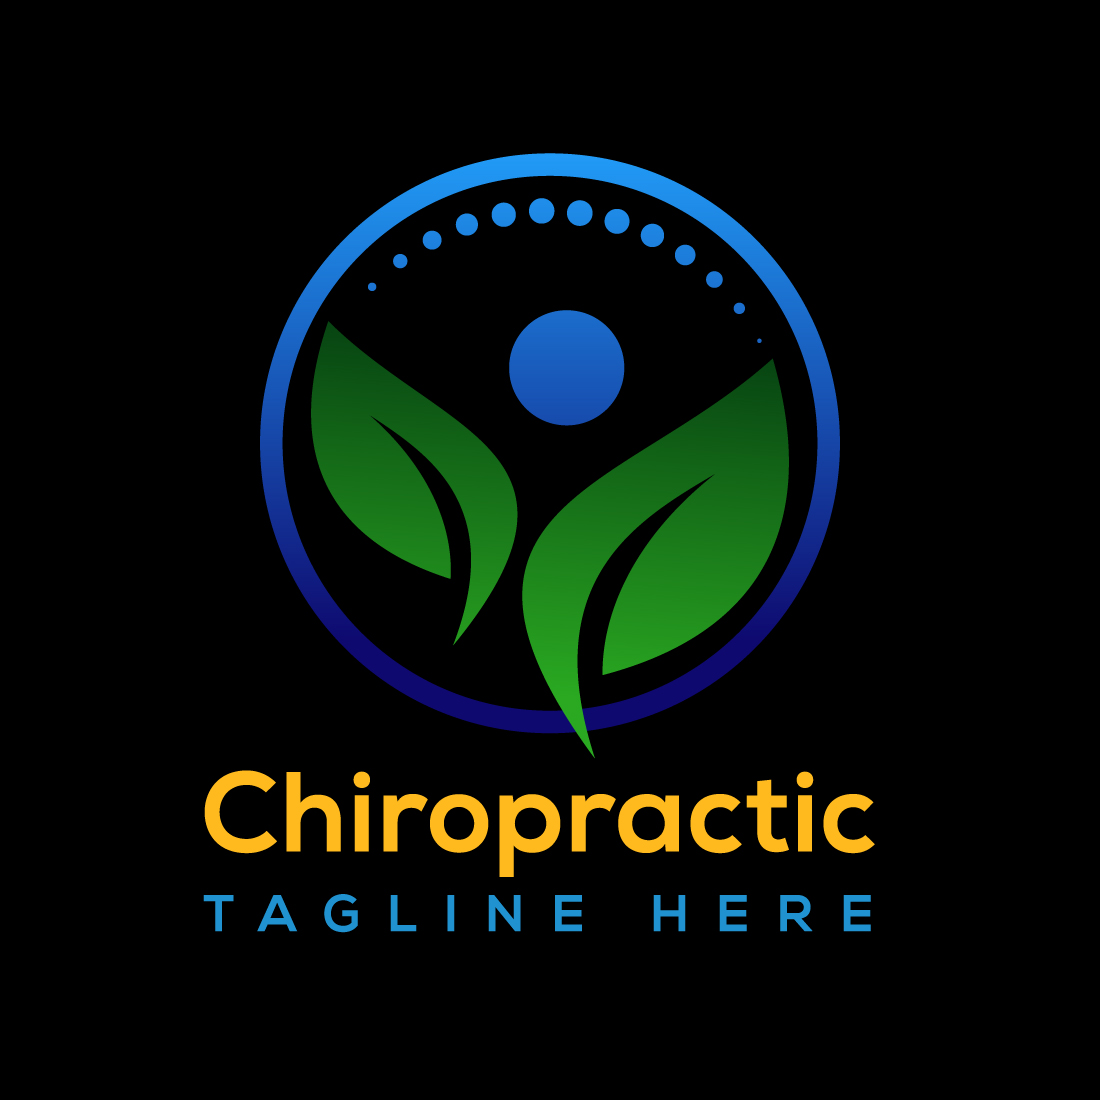 Leaf Chiropractic Logo Black Vector Design cover image.